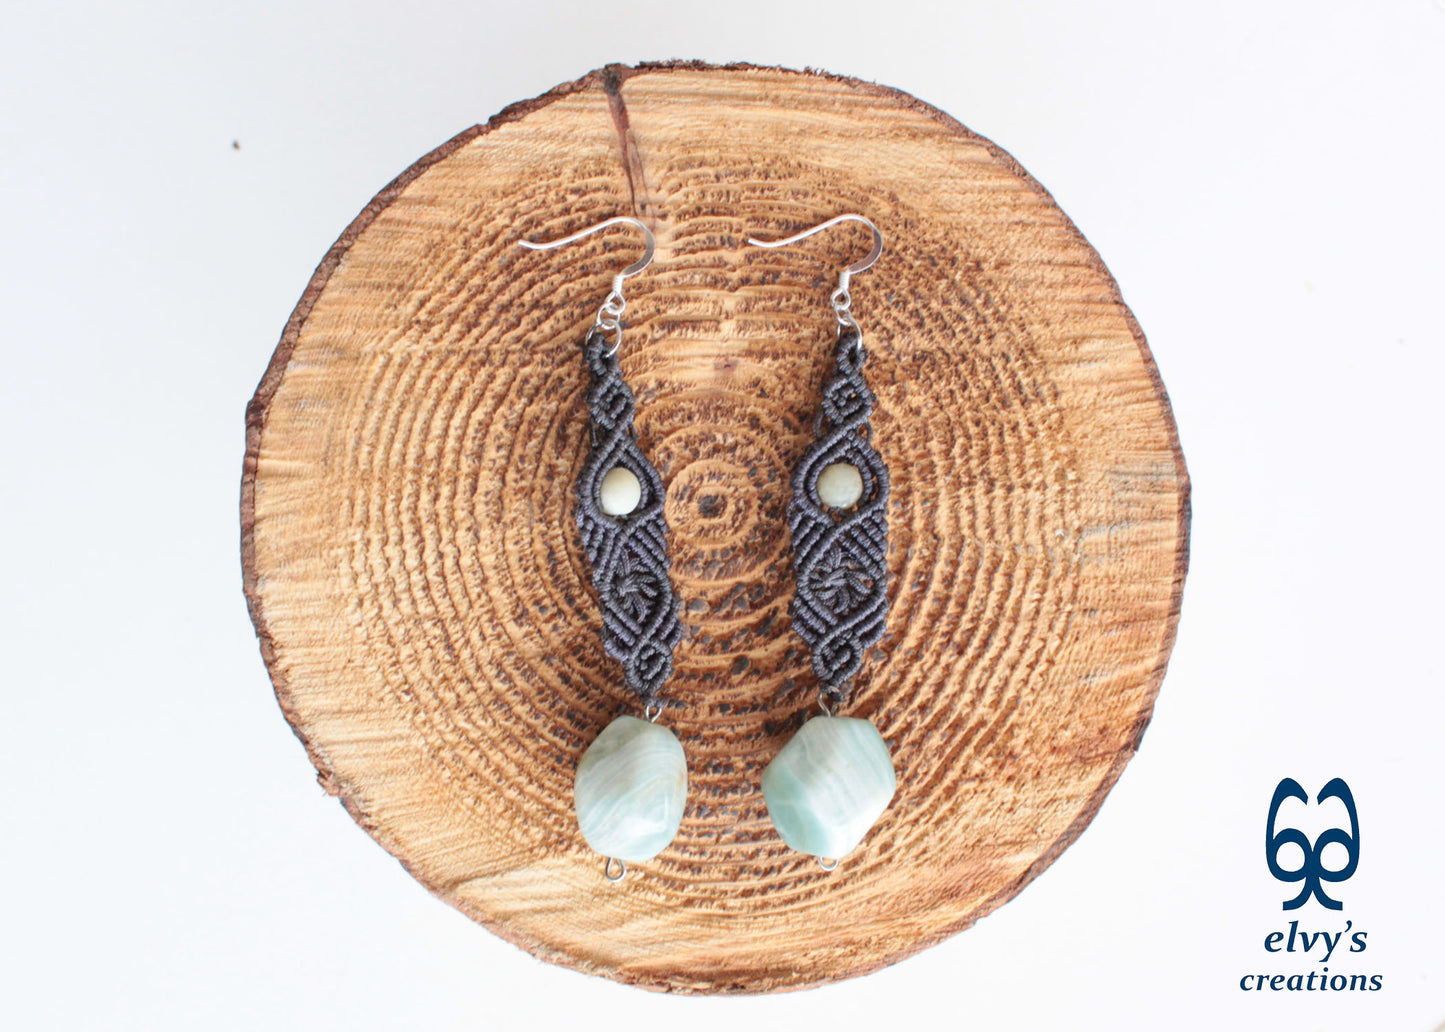 Handmade Gray Macramé Earrings with blue Amazonite Gemstones, Boho Dangle Earrings 